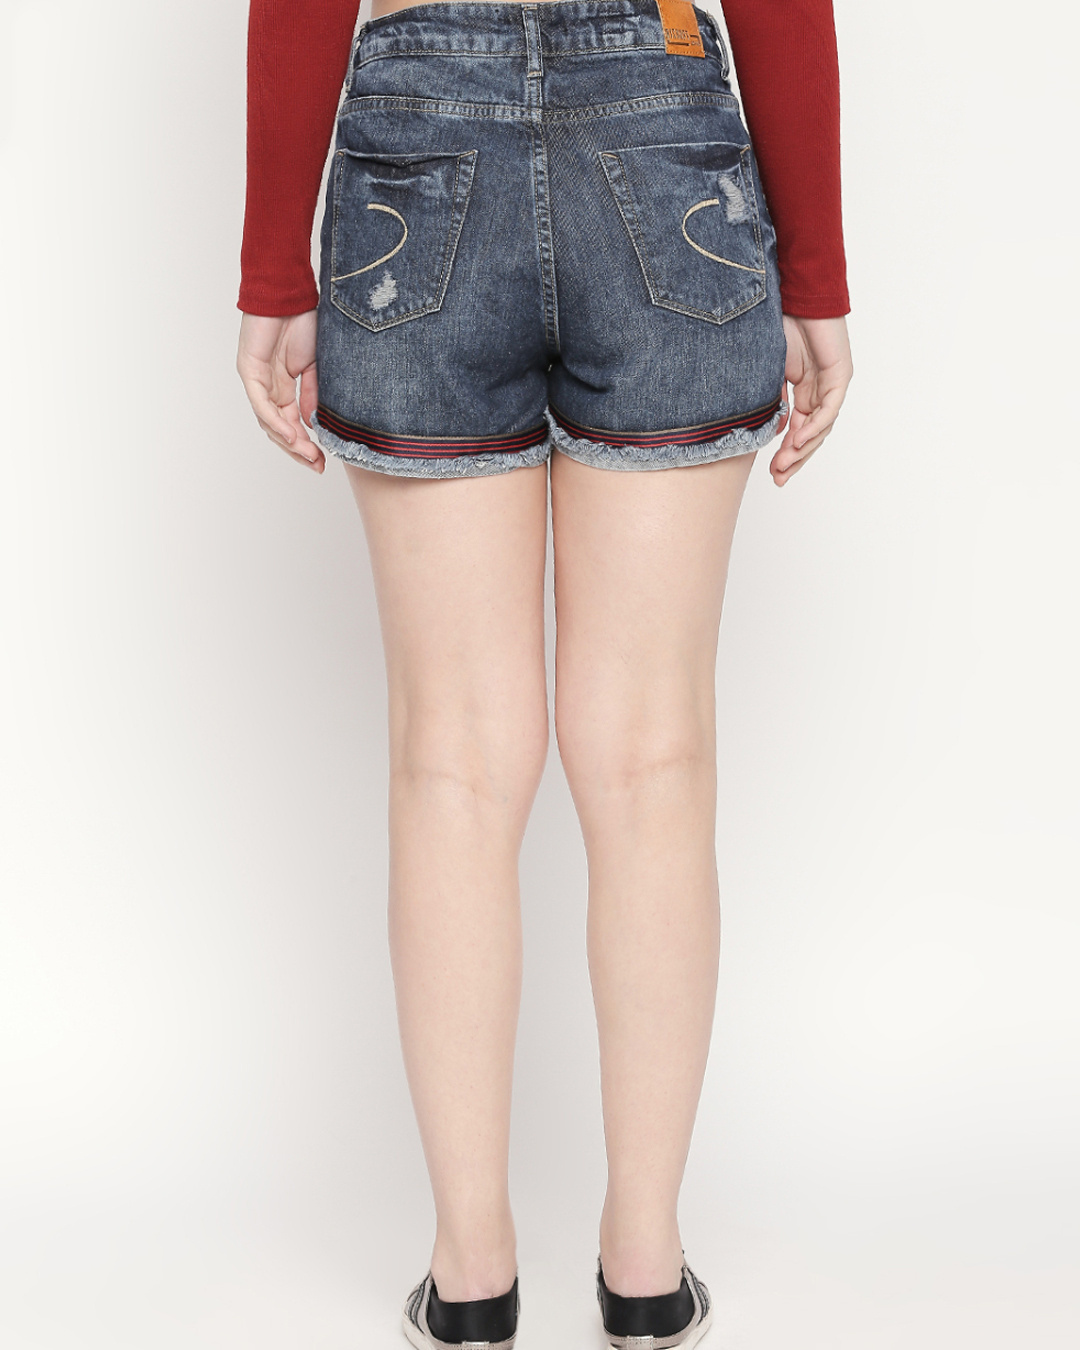 Shop Blue 100% Cotton Non Stretch Slim Fit Hot Shorts For Women's-Back